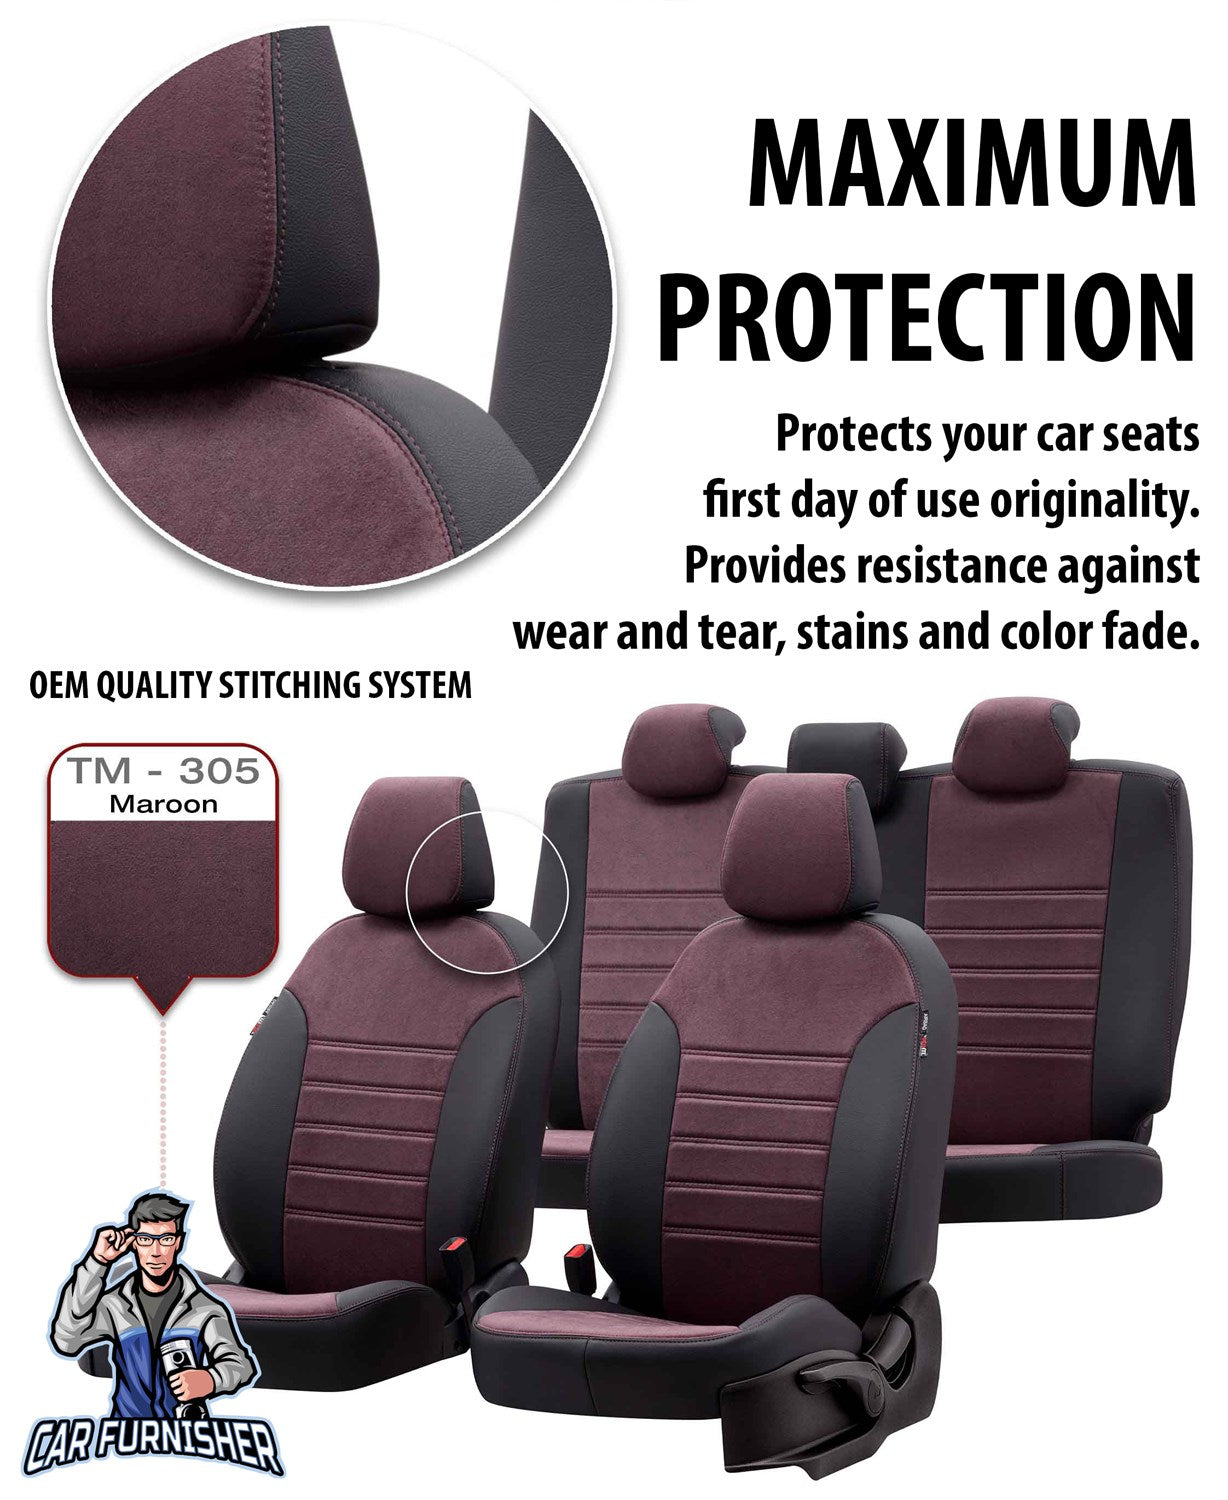 Seat Ateca Seat Covers Milano Suede Design Black Leather & Suede Fabric